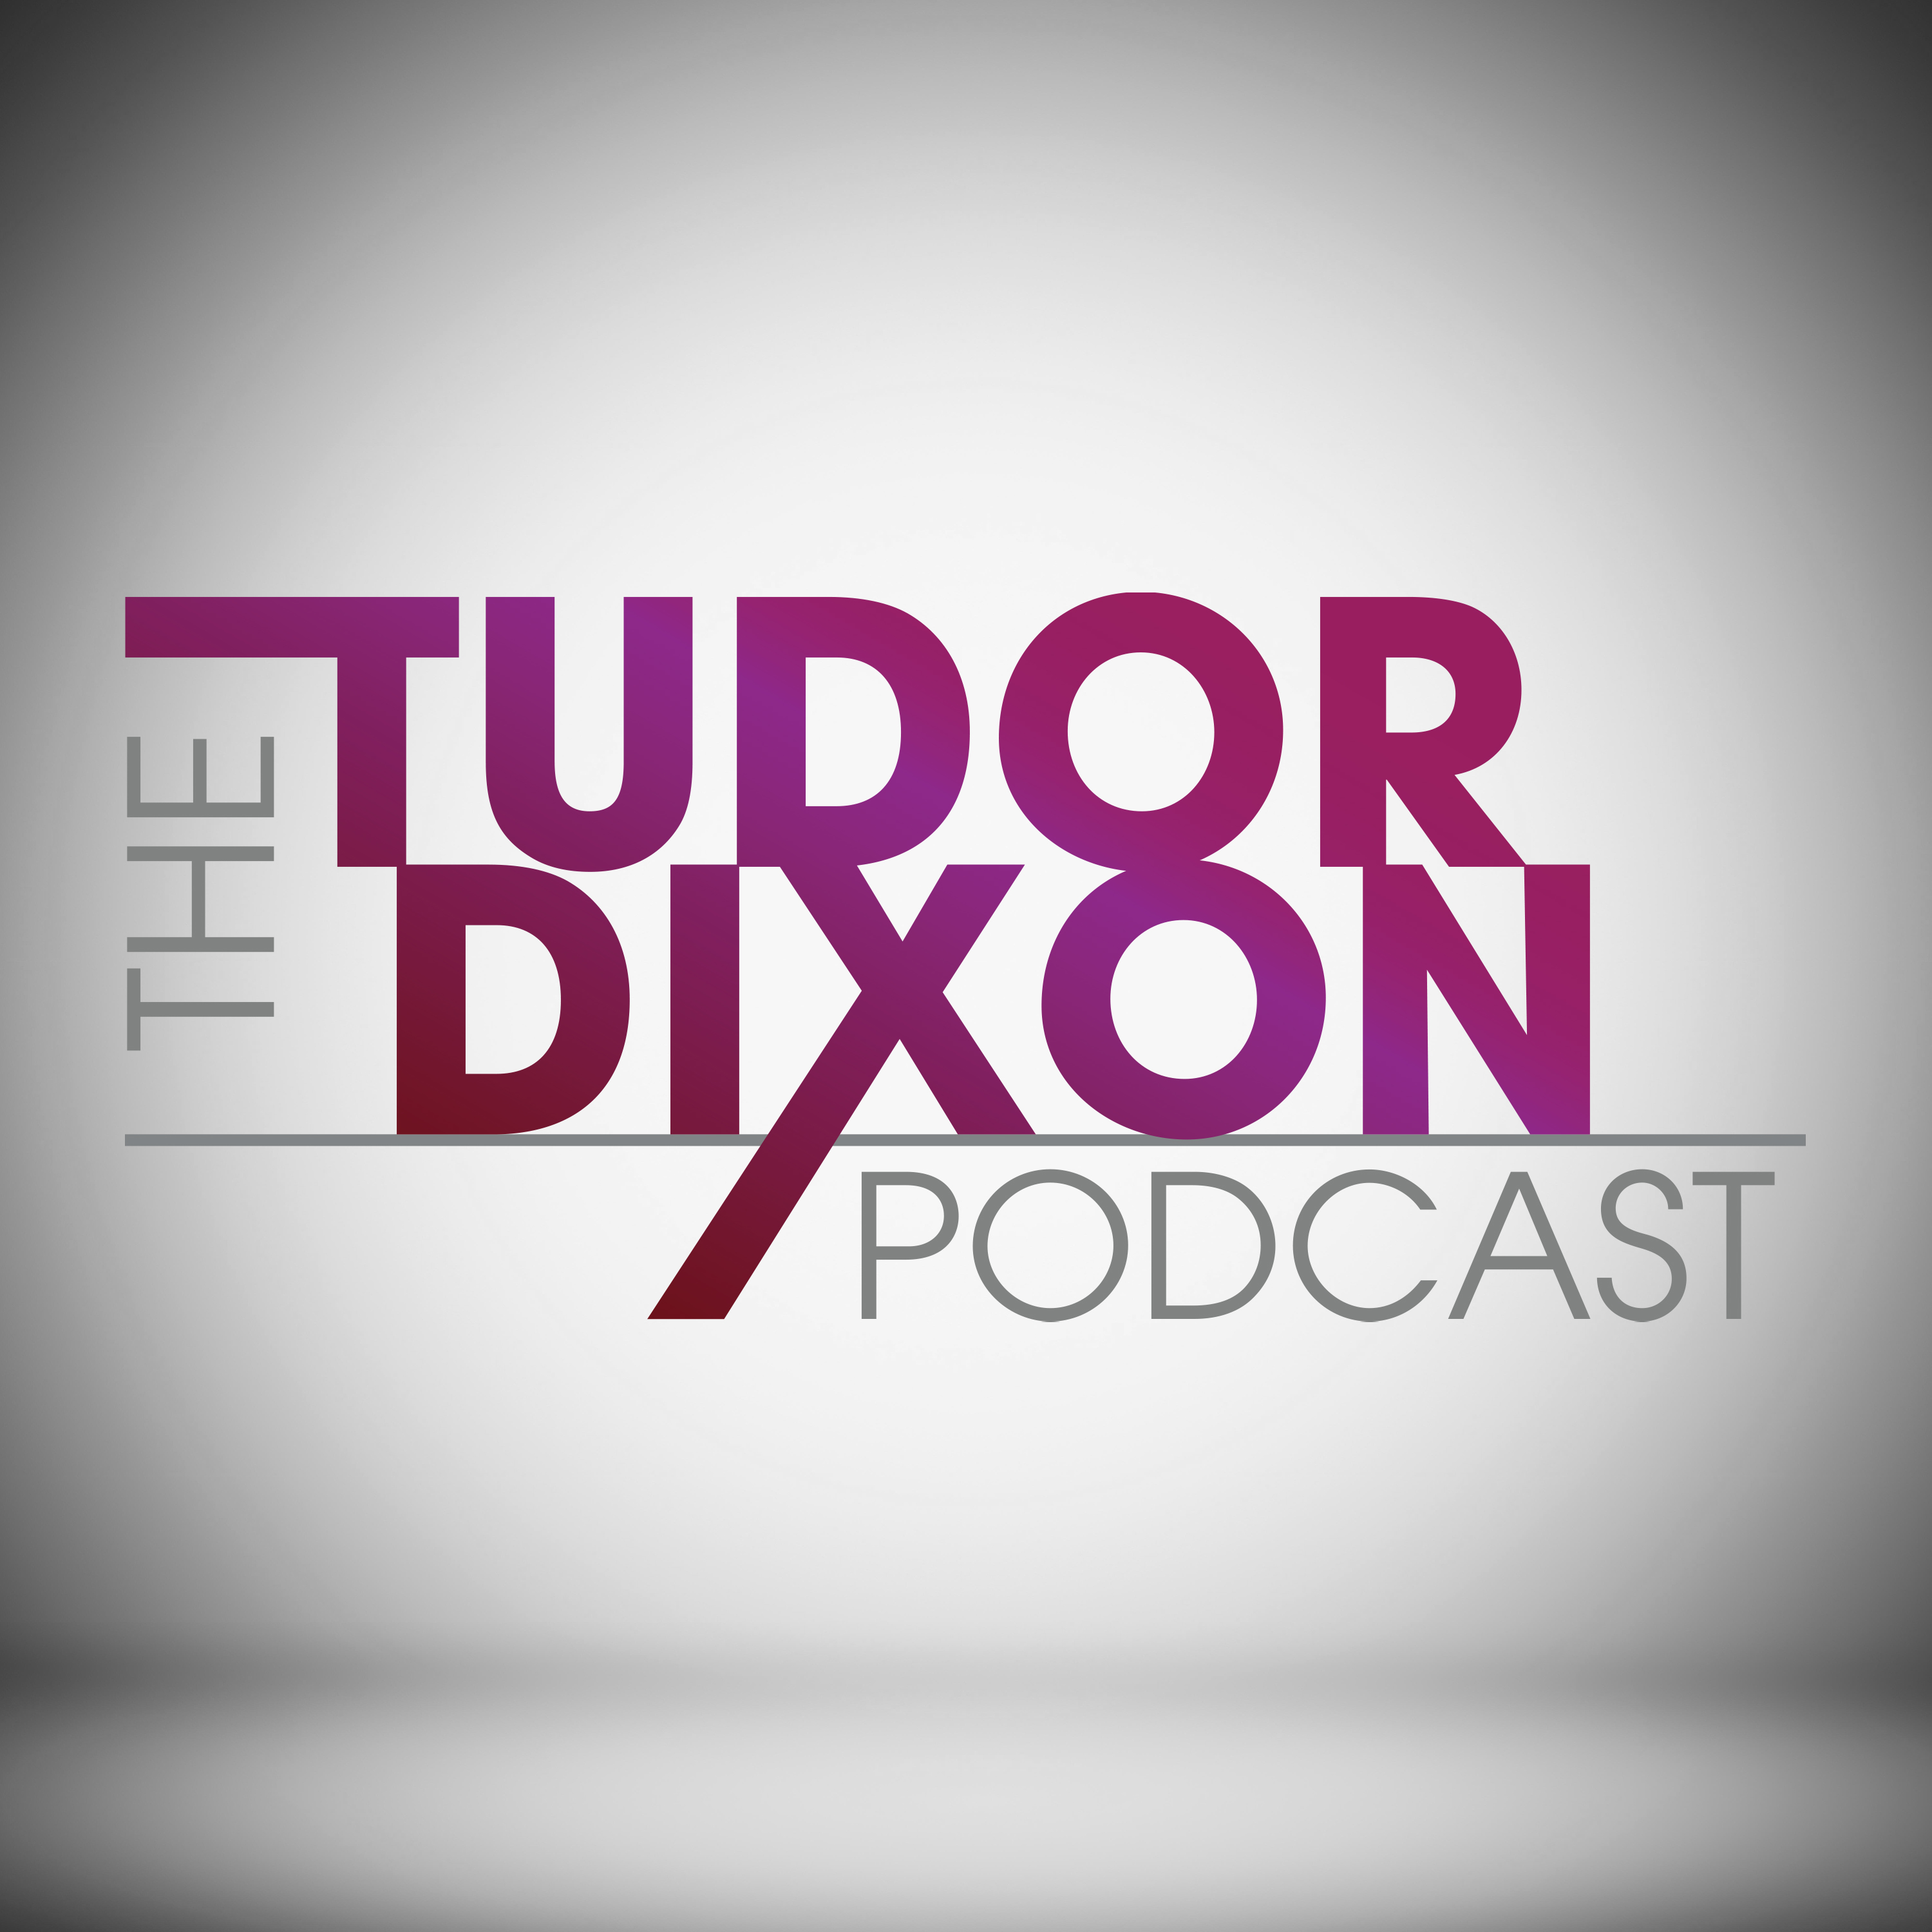 The Tudor Dixon Podcast: The Real China with Xi Van Fleet